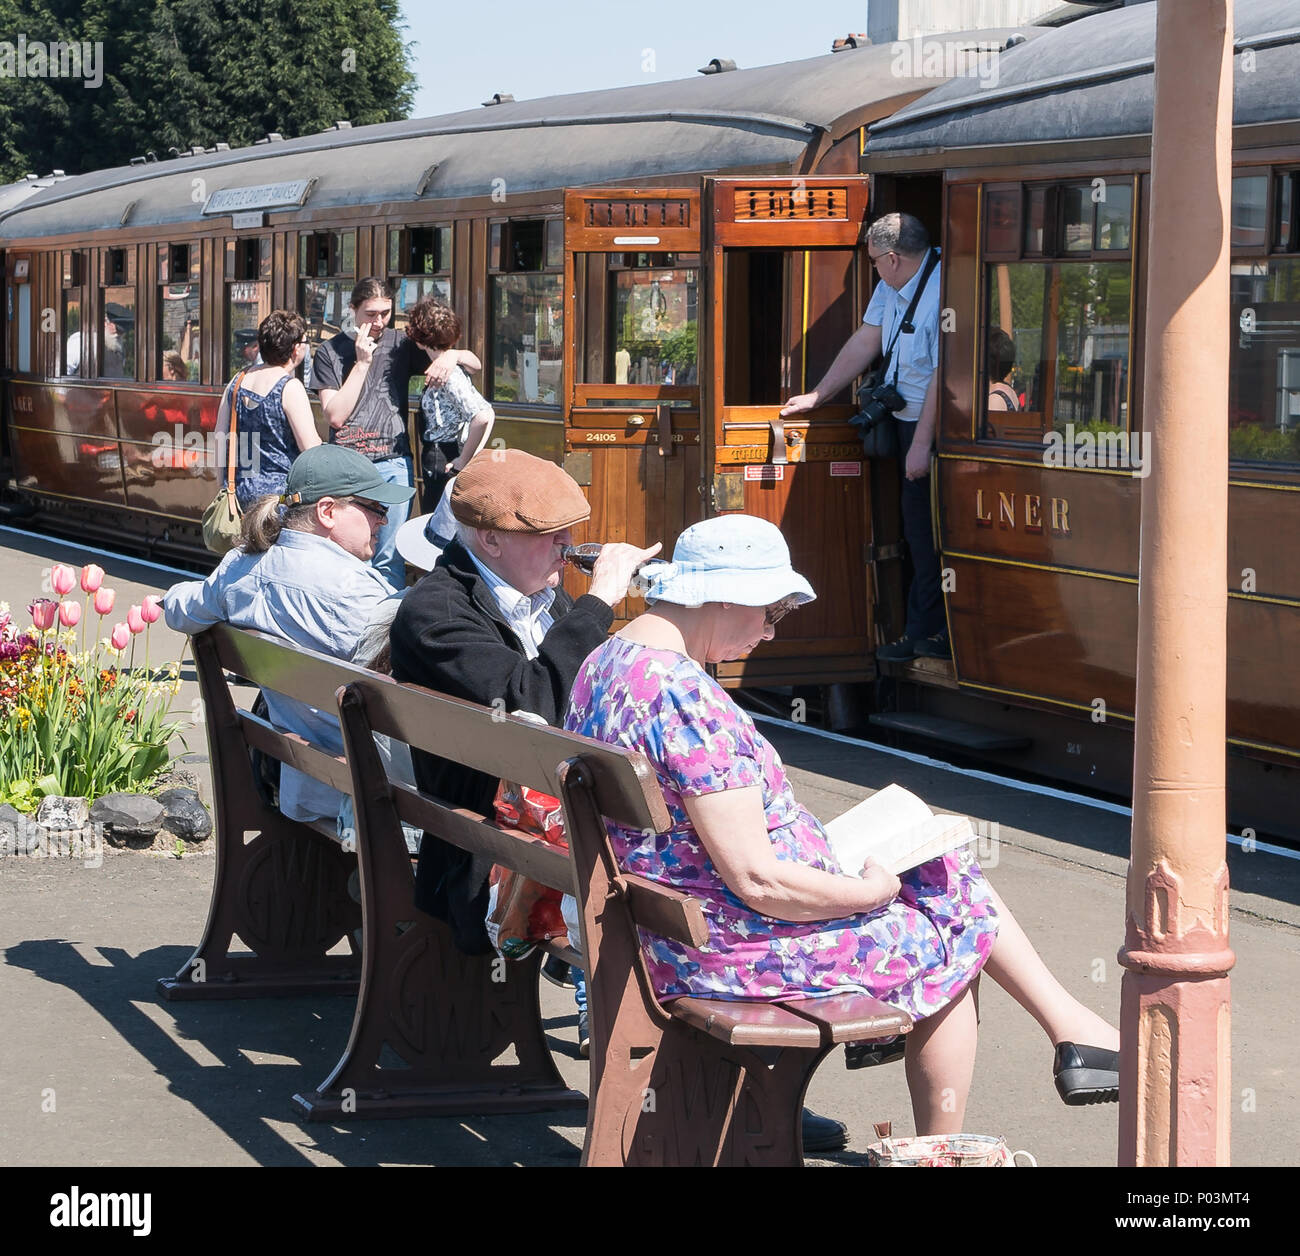 Busy platform scene at vintage railway station in summer sunshine. Passengers on & off vintage train. British folk sat on bench waiting & enjoying sun. Stock Photo